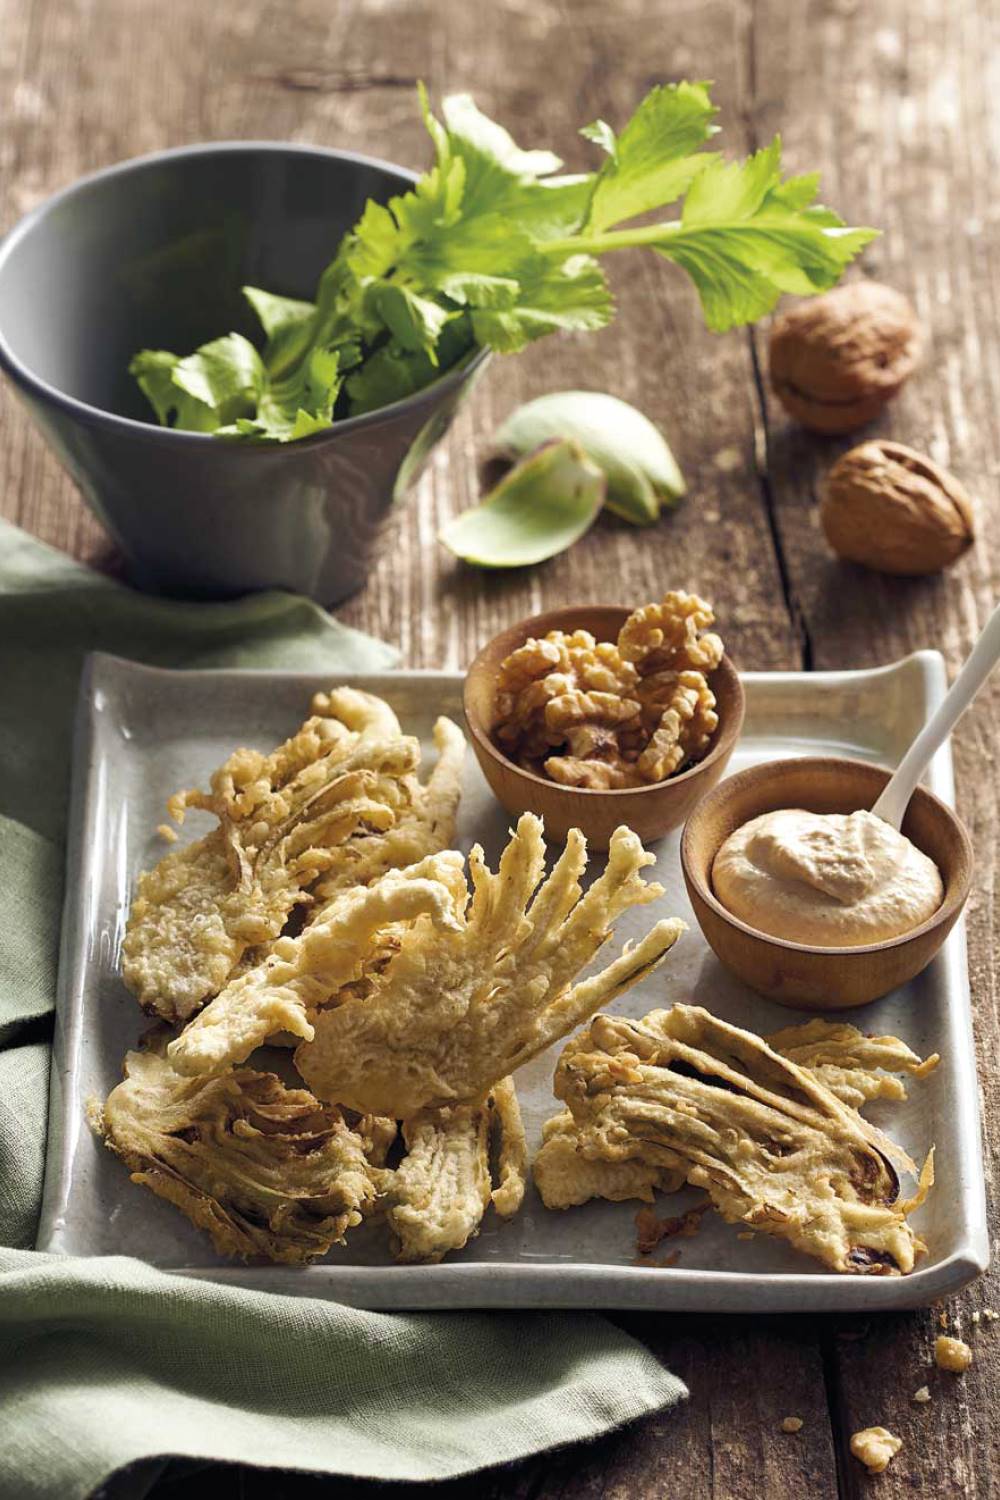 Alcachofas en tempura